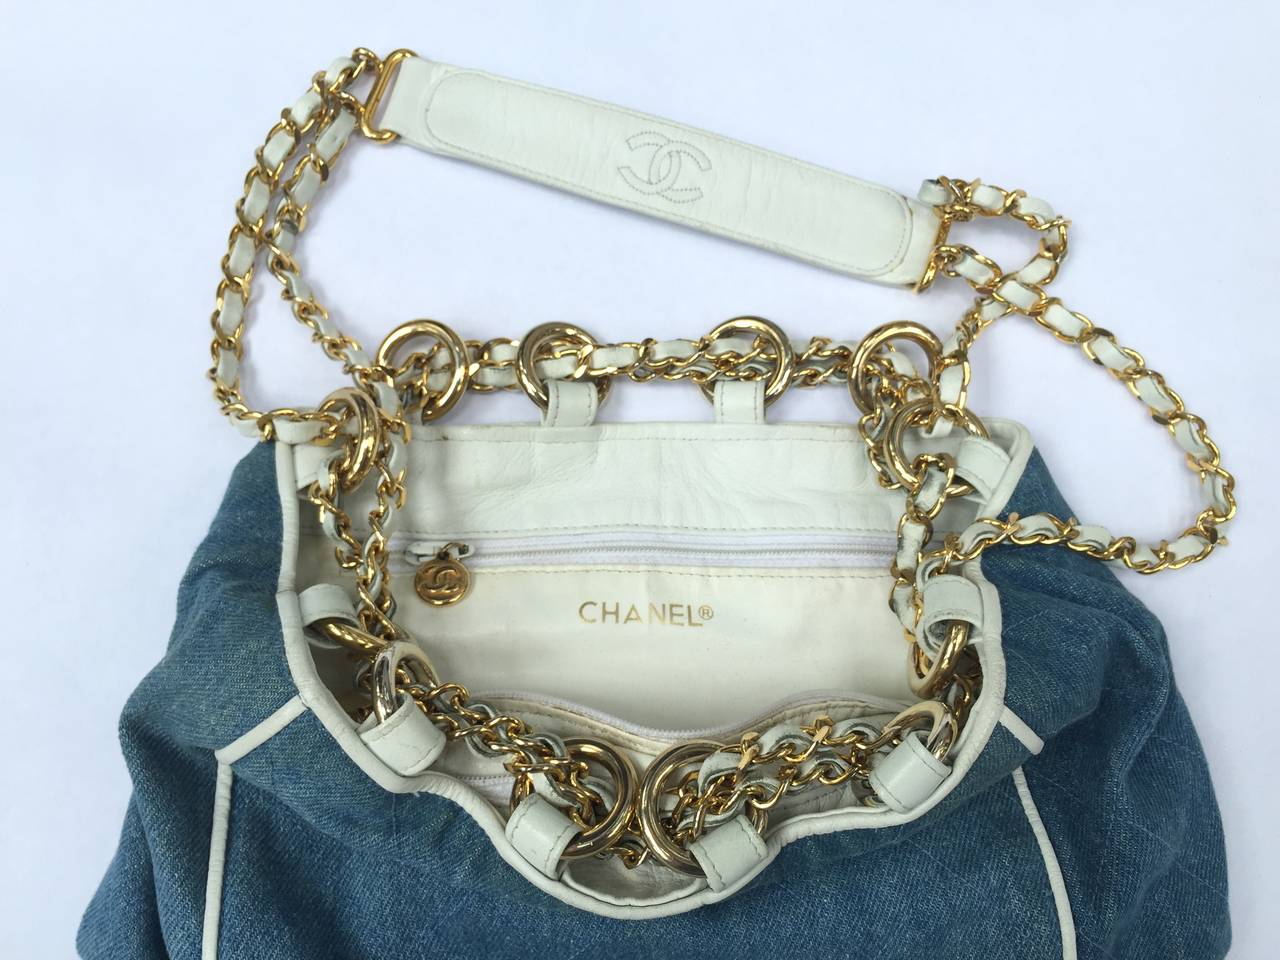 Women's Chanel denim white leather trim shoulder handbag.